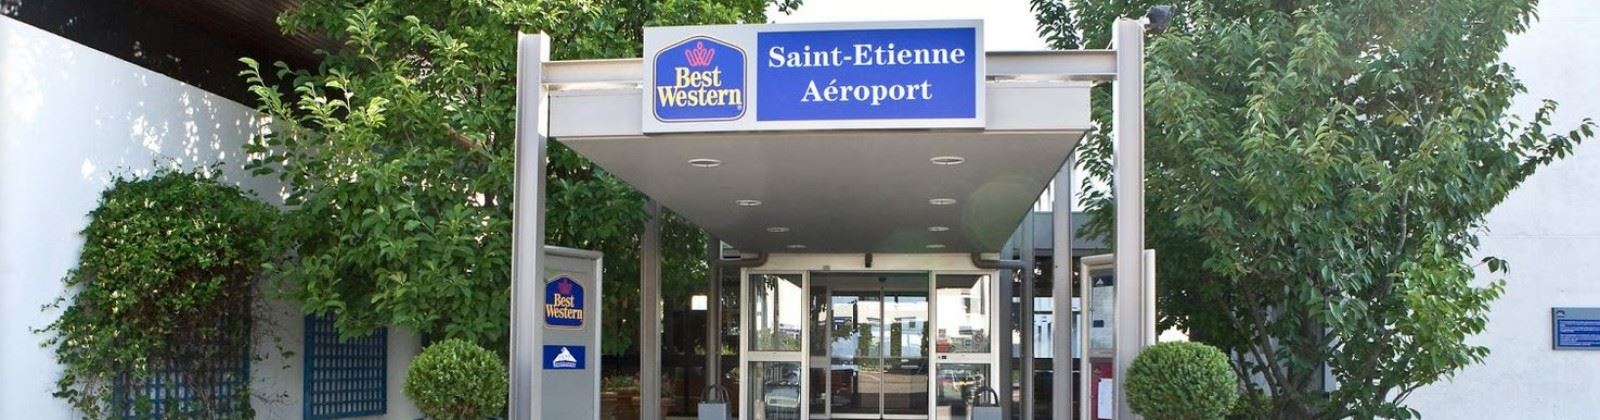 OLEVENE Image - saint-etienne-aeroport-olevene-restaurant-hotel-seminaire-booking-reunion-booking-